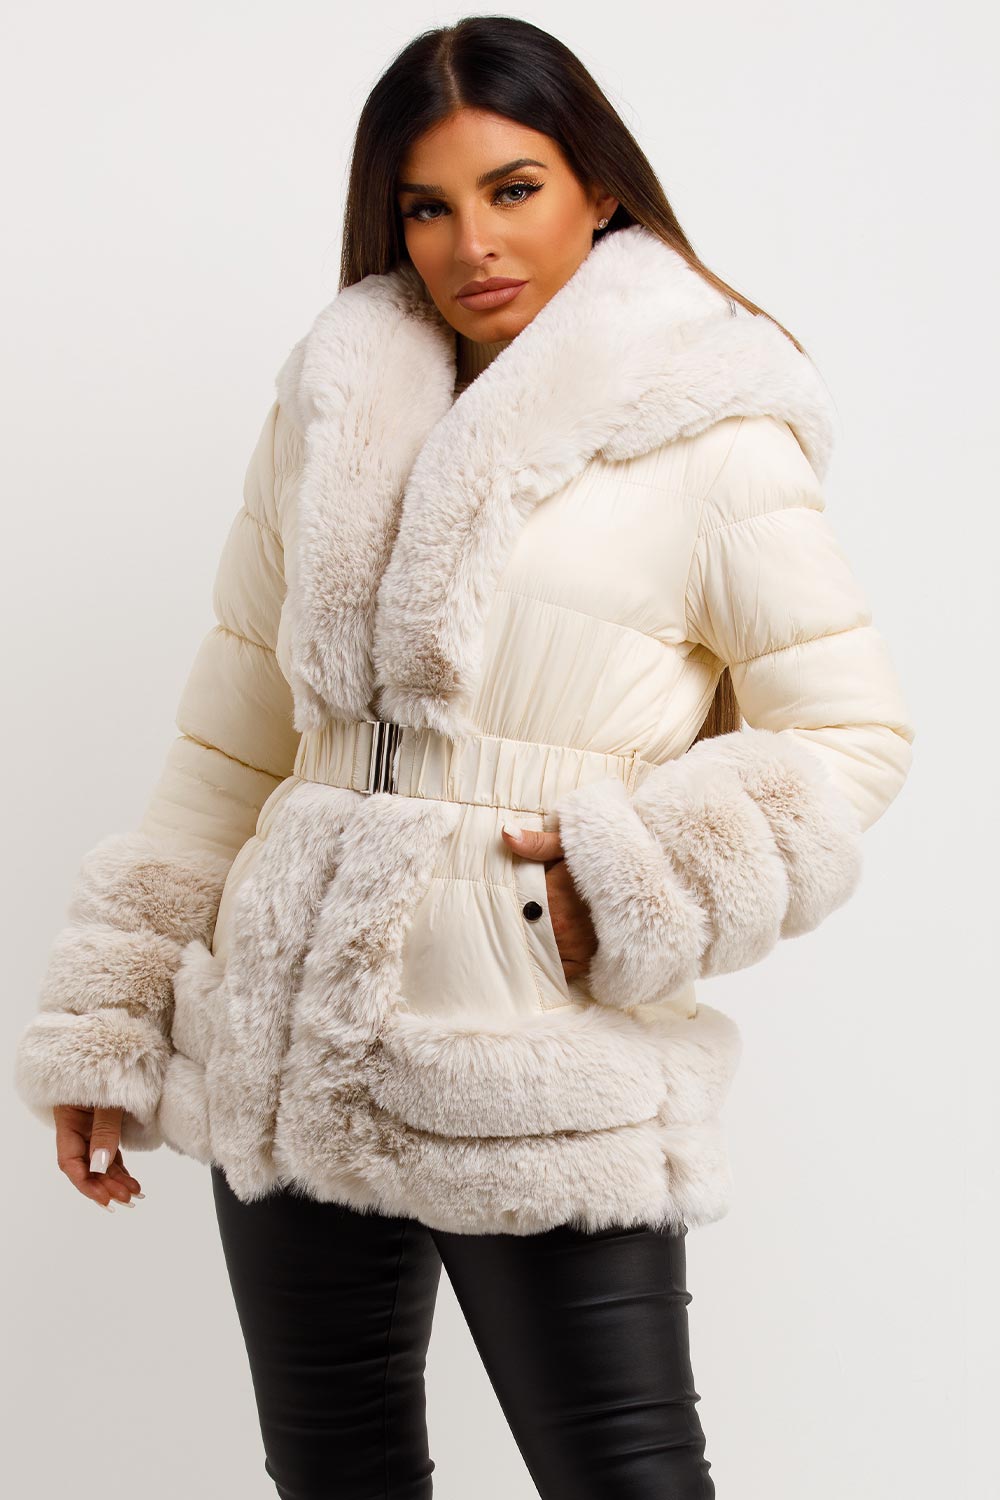 beige fur trim hooded puffer jacket with belt